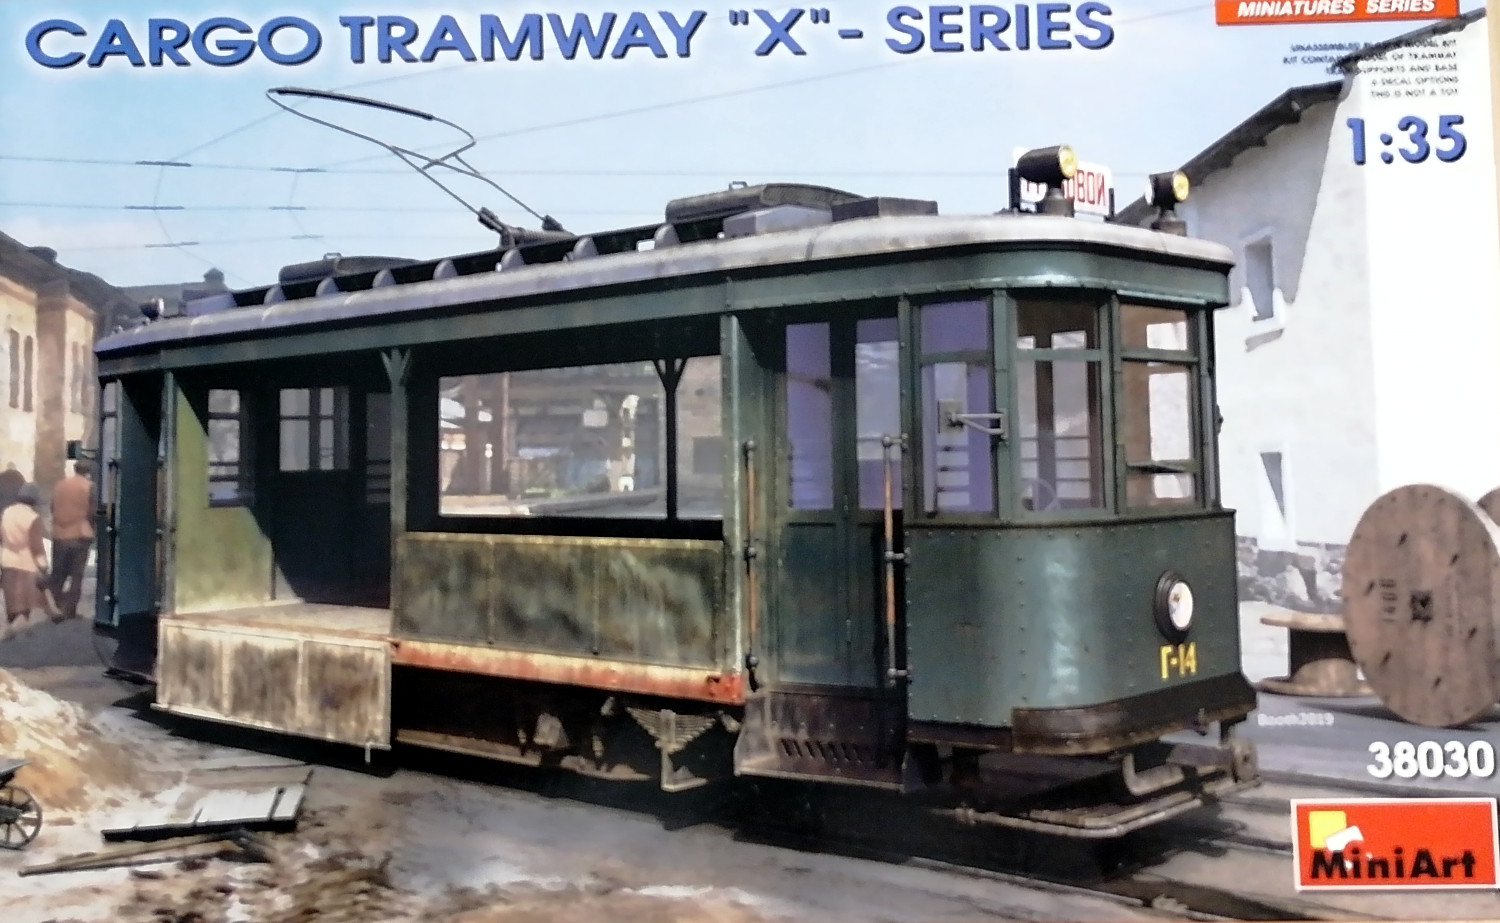 [MINIART] Tram soviétique SerieX cargo Réf 38030) 4XRSMb-Tram01